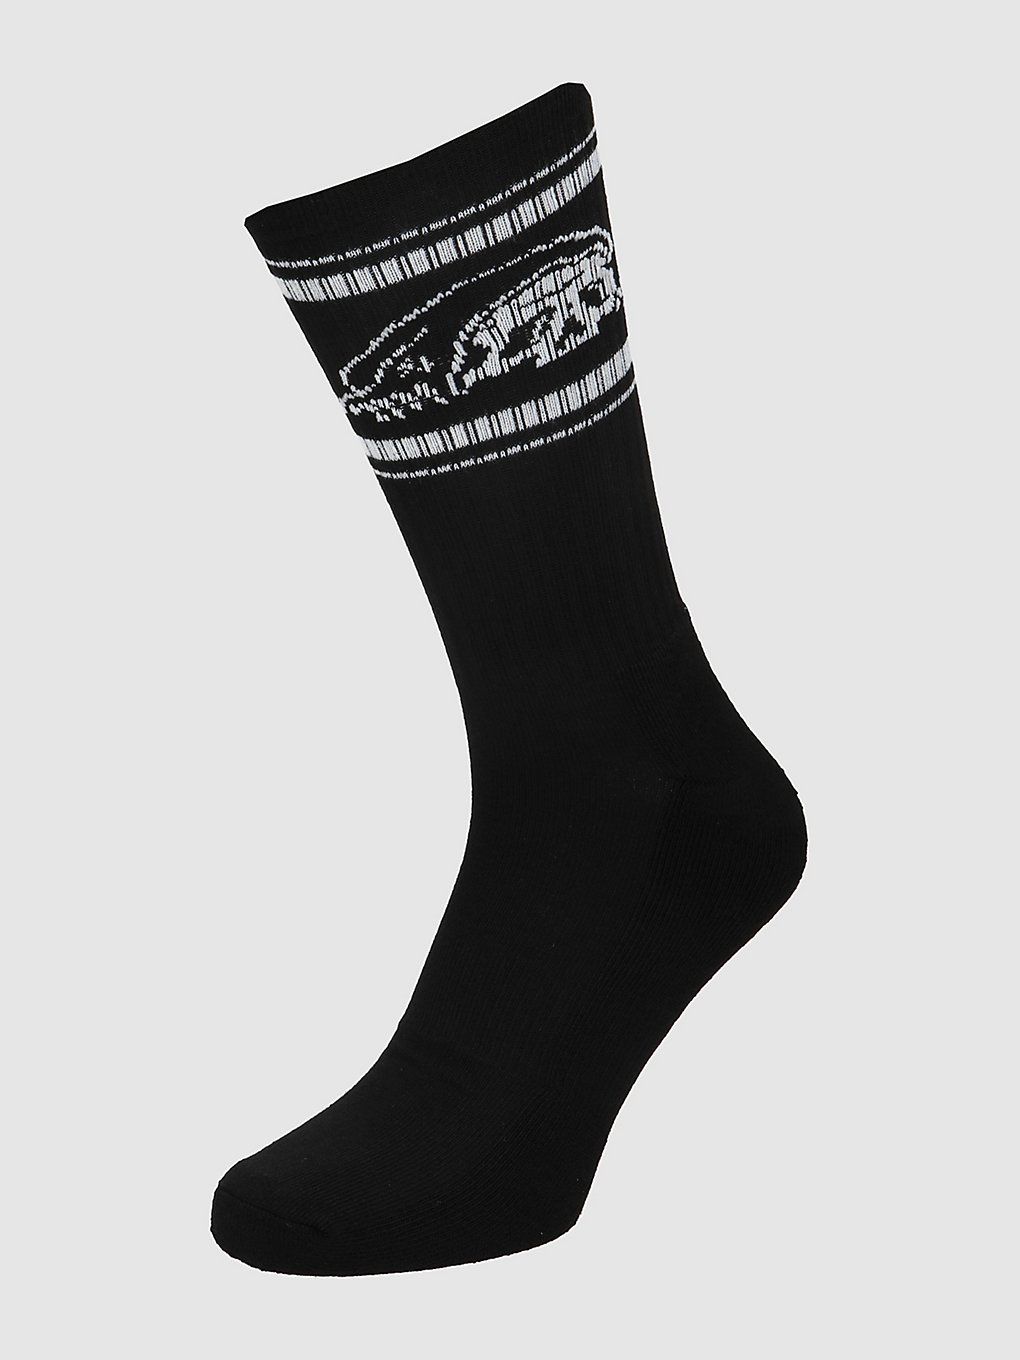 Lurking Class Basic Acc Socken black kaufen